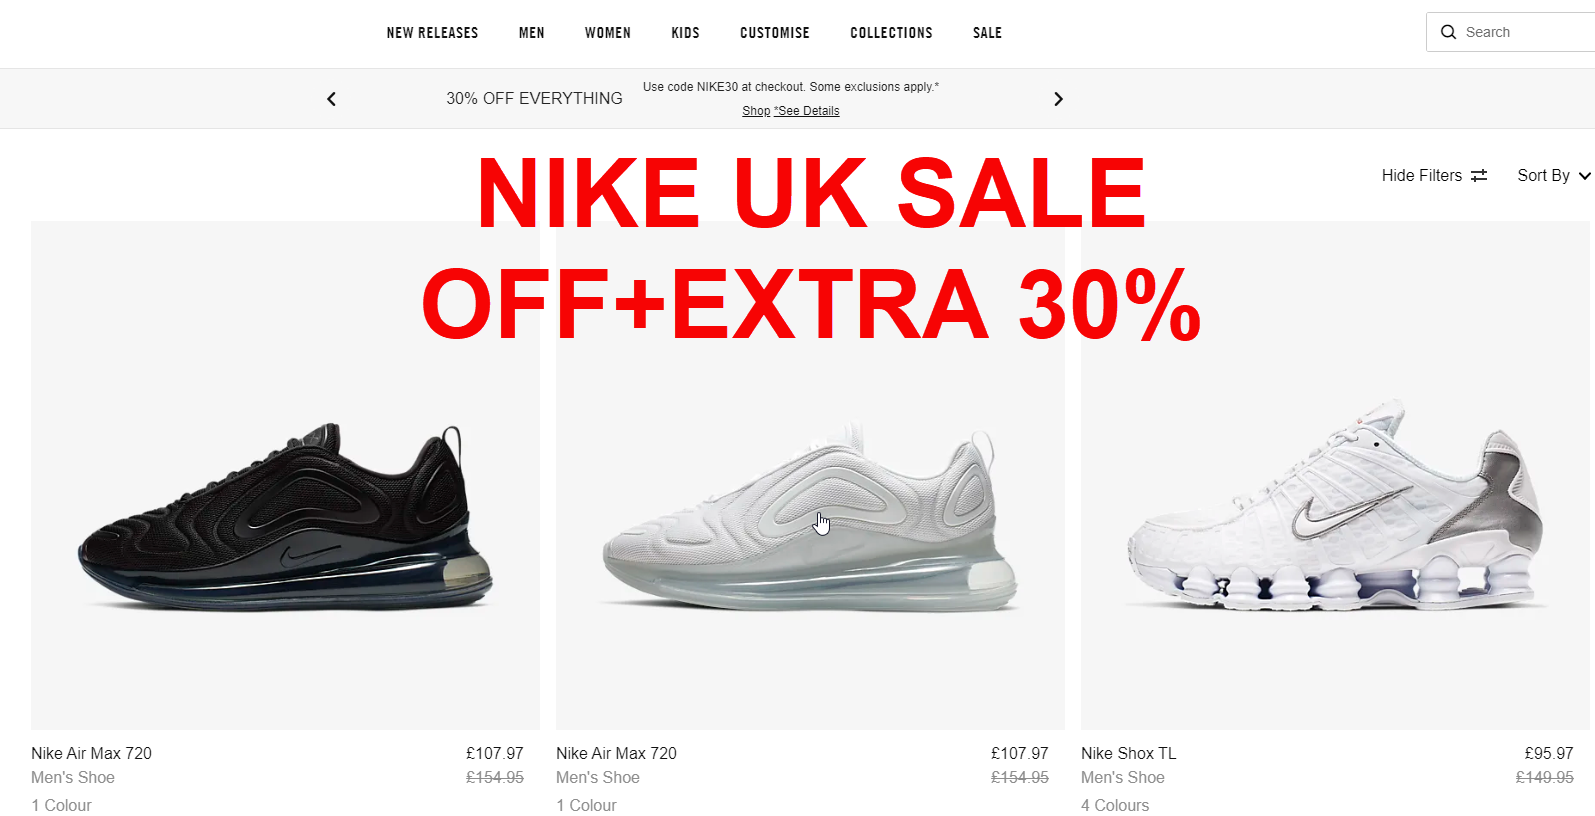 Nike UK siêu giảm giá-sale off Extra 30% up to 70%